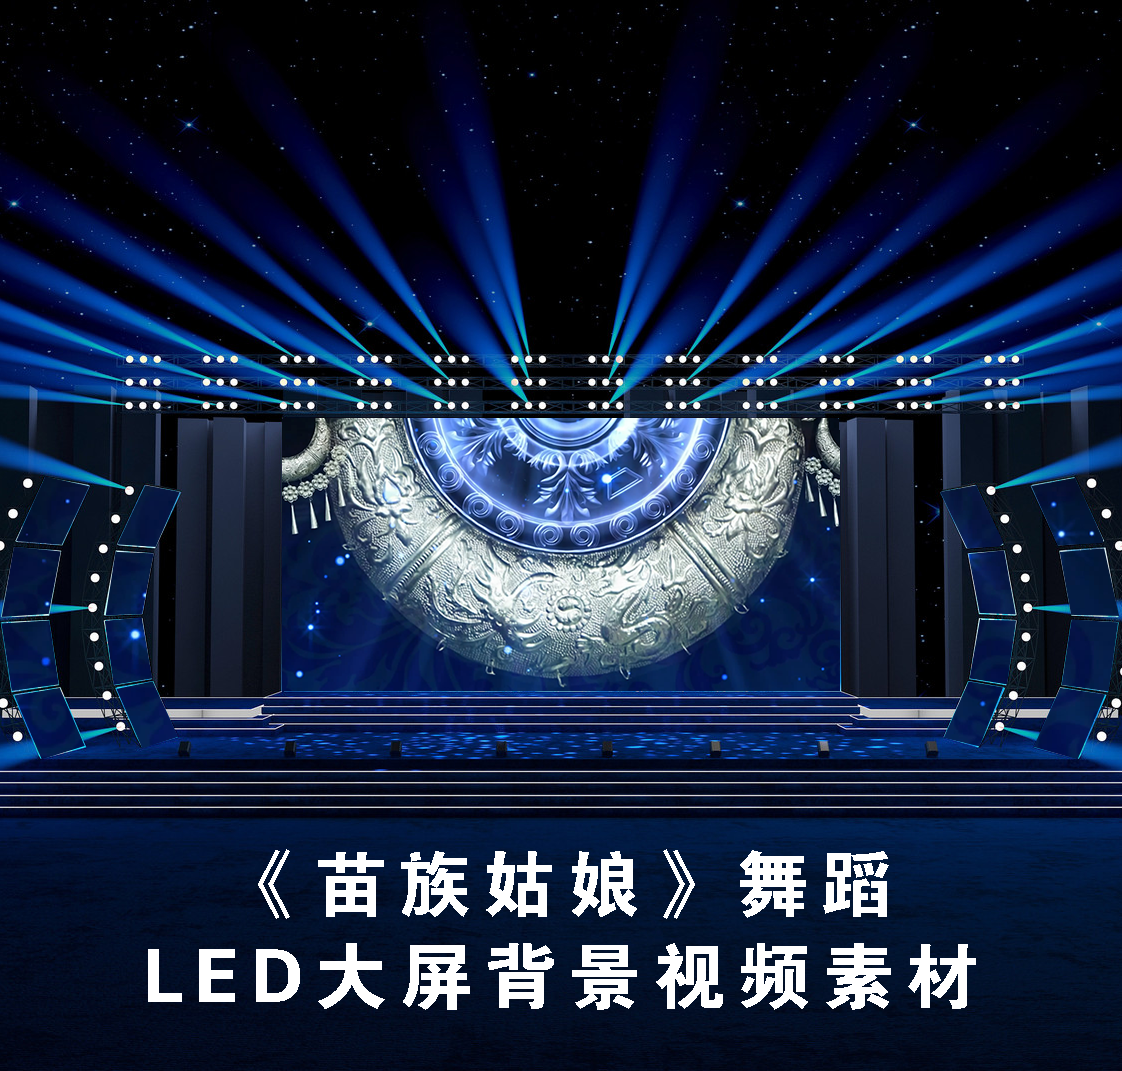 S4862《苗族姑娘》苗族汇报演出 LED节目大屏舞美背景视频素材